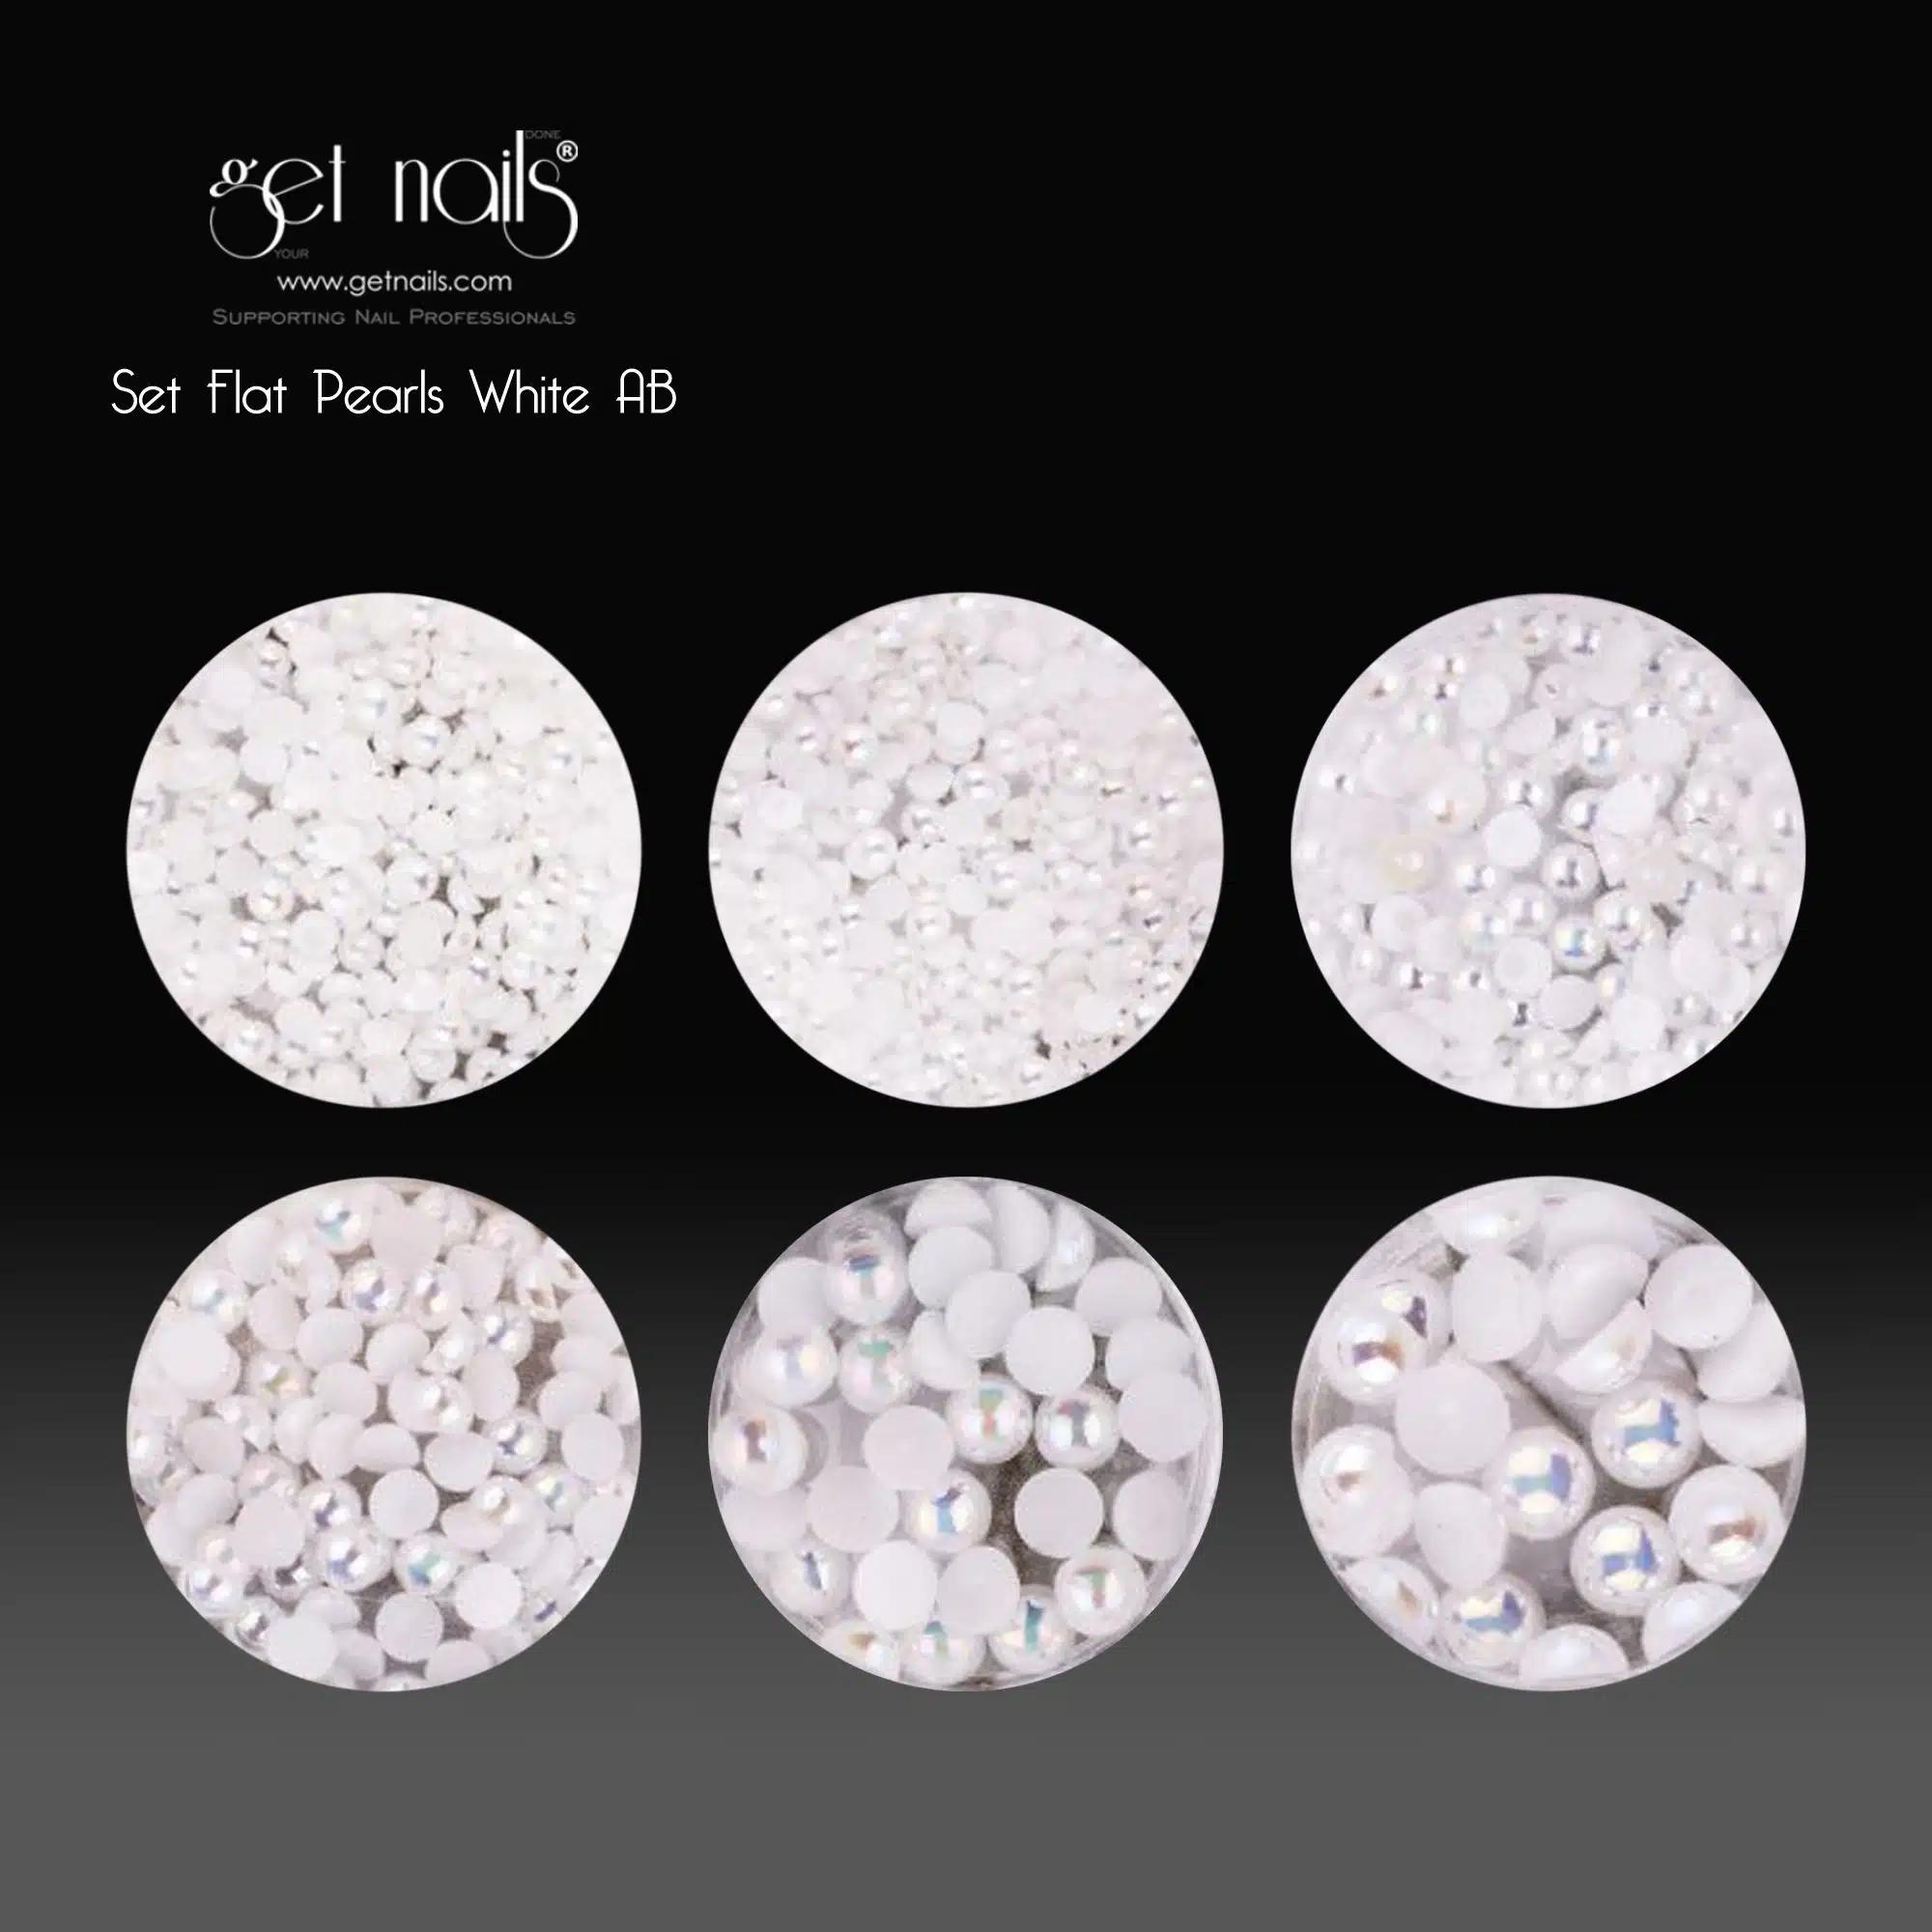 Get Nails Austria - Set Flat Pearls White AB